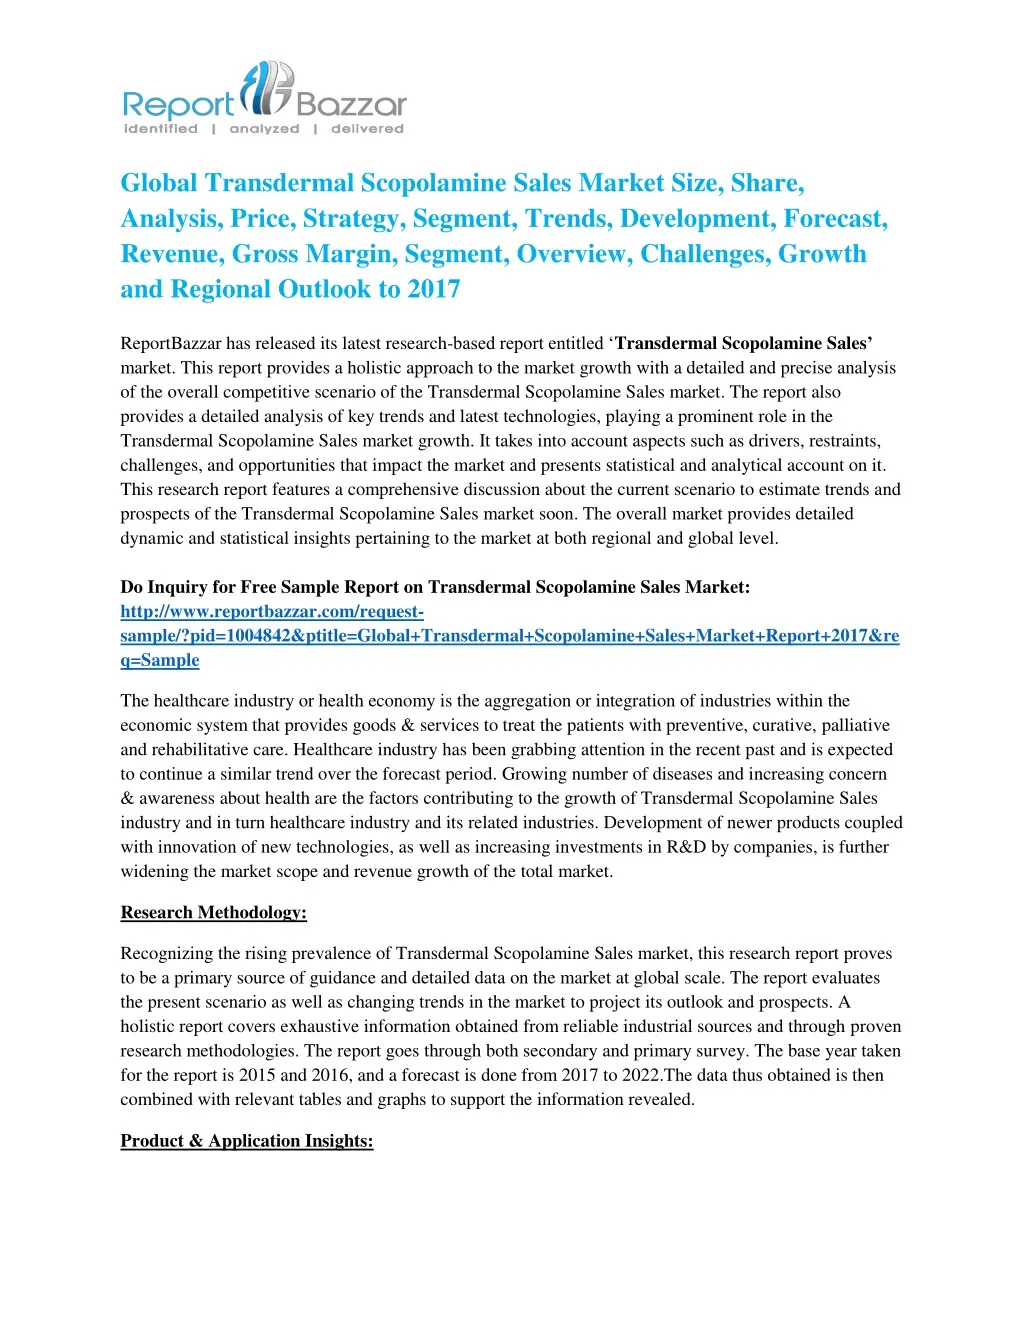 global transdermal scopolamine sales market size